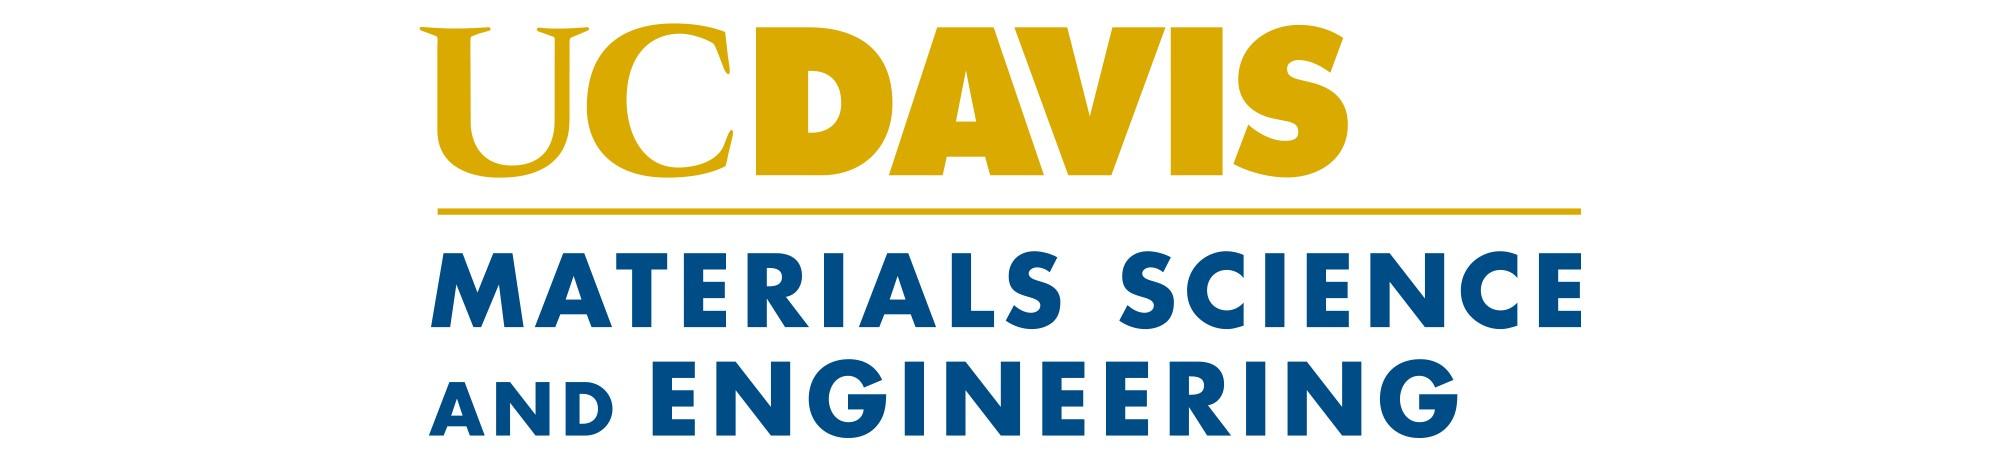 uc davis materials science engineering senior sendoff 2020